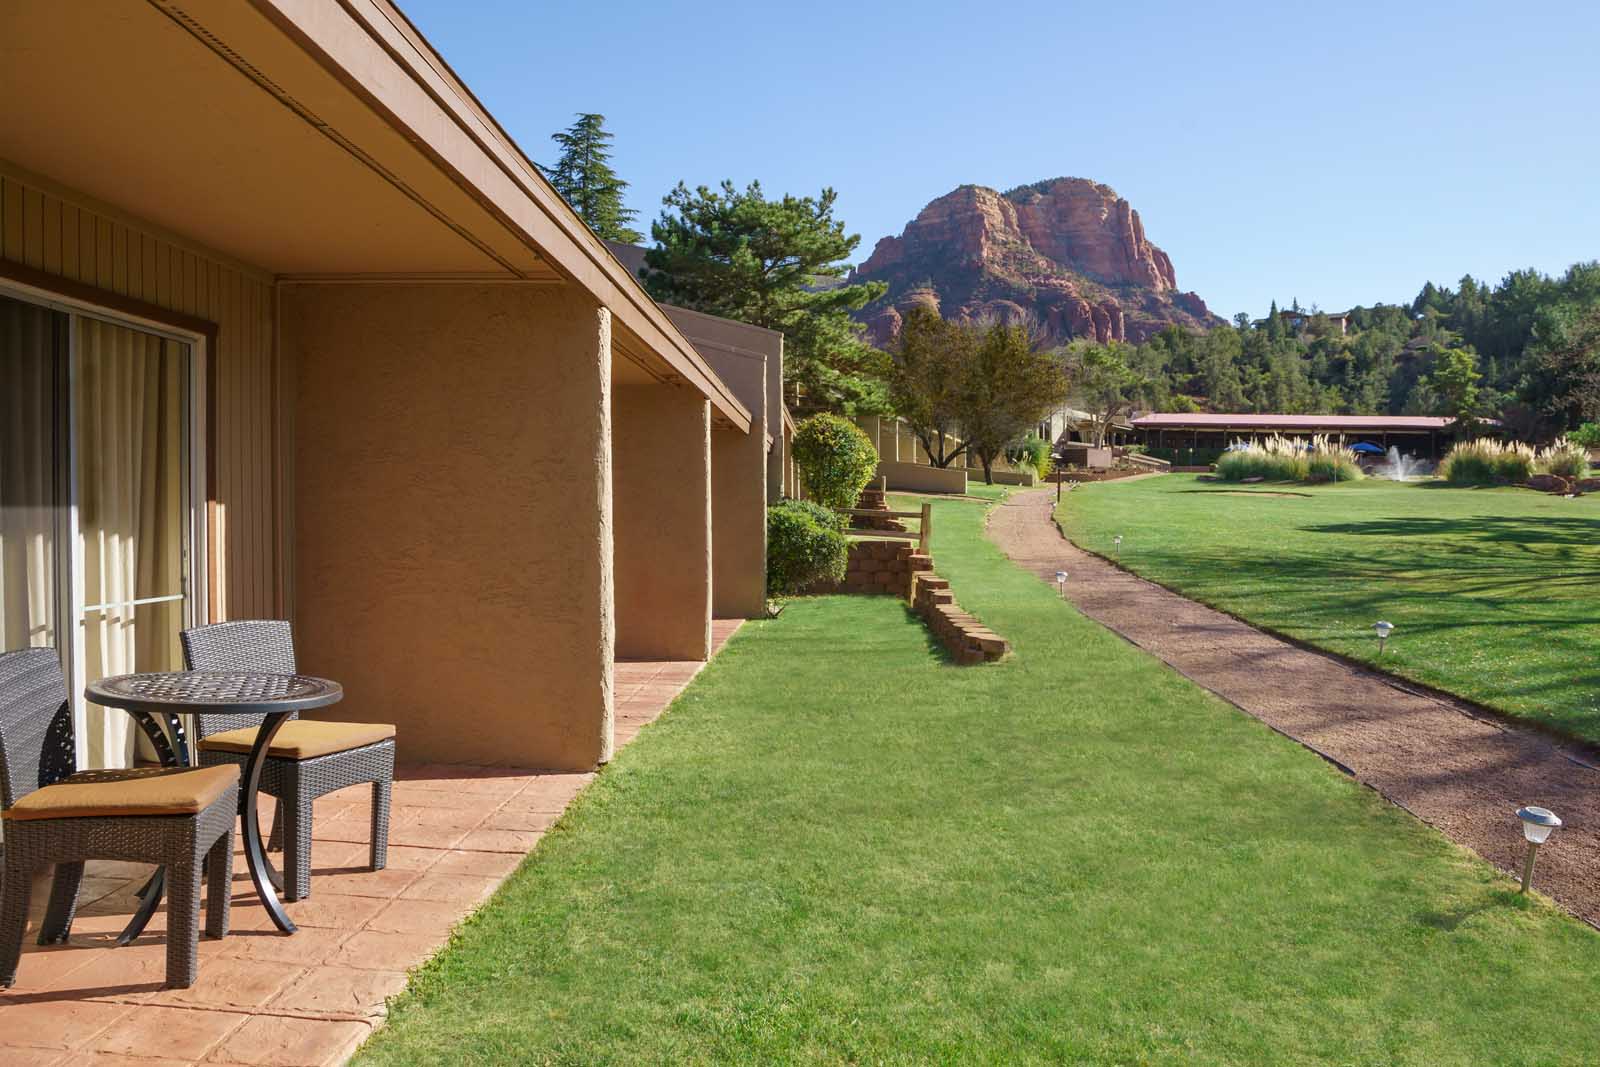 Best Hotels in Sedona Arizona Poco Diablo Resort and Spa